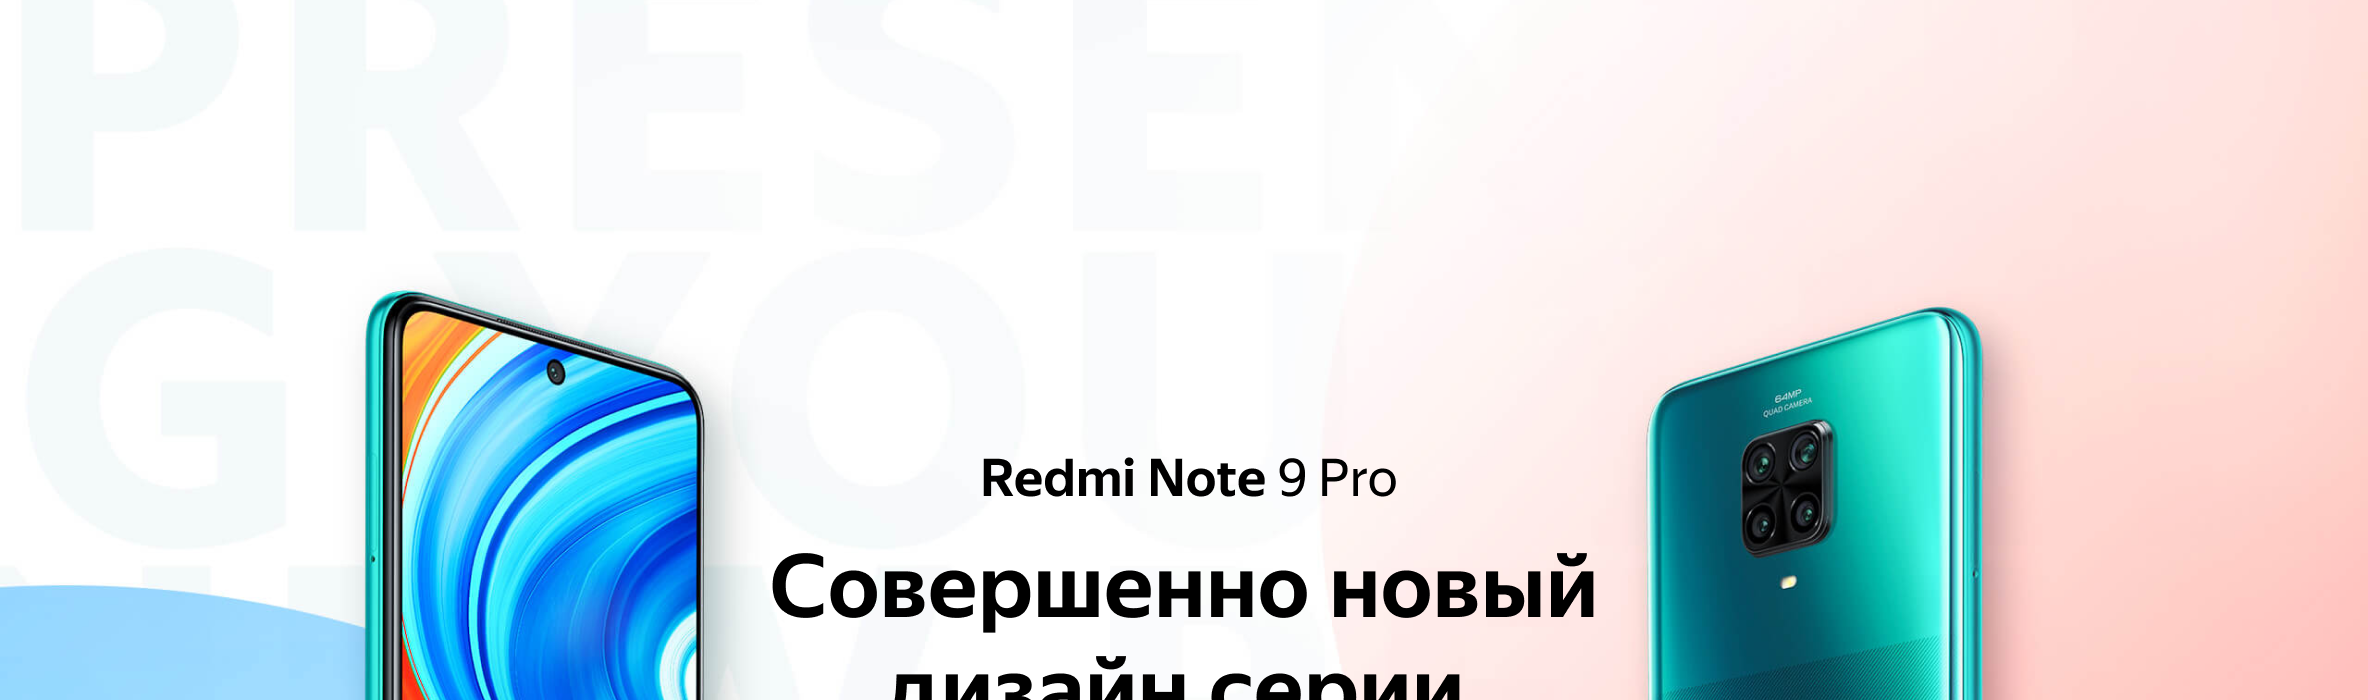 Смартфон Redmi Note 9 Pro 6/128 Gb gray - paragraf.uz